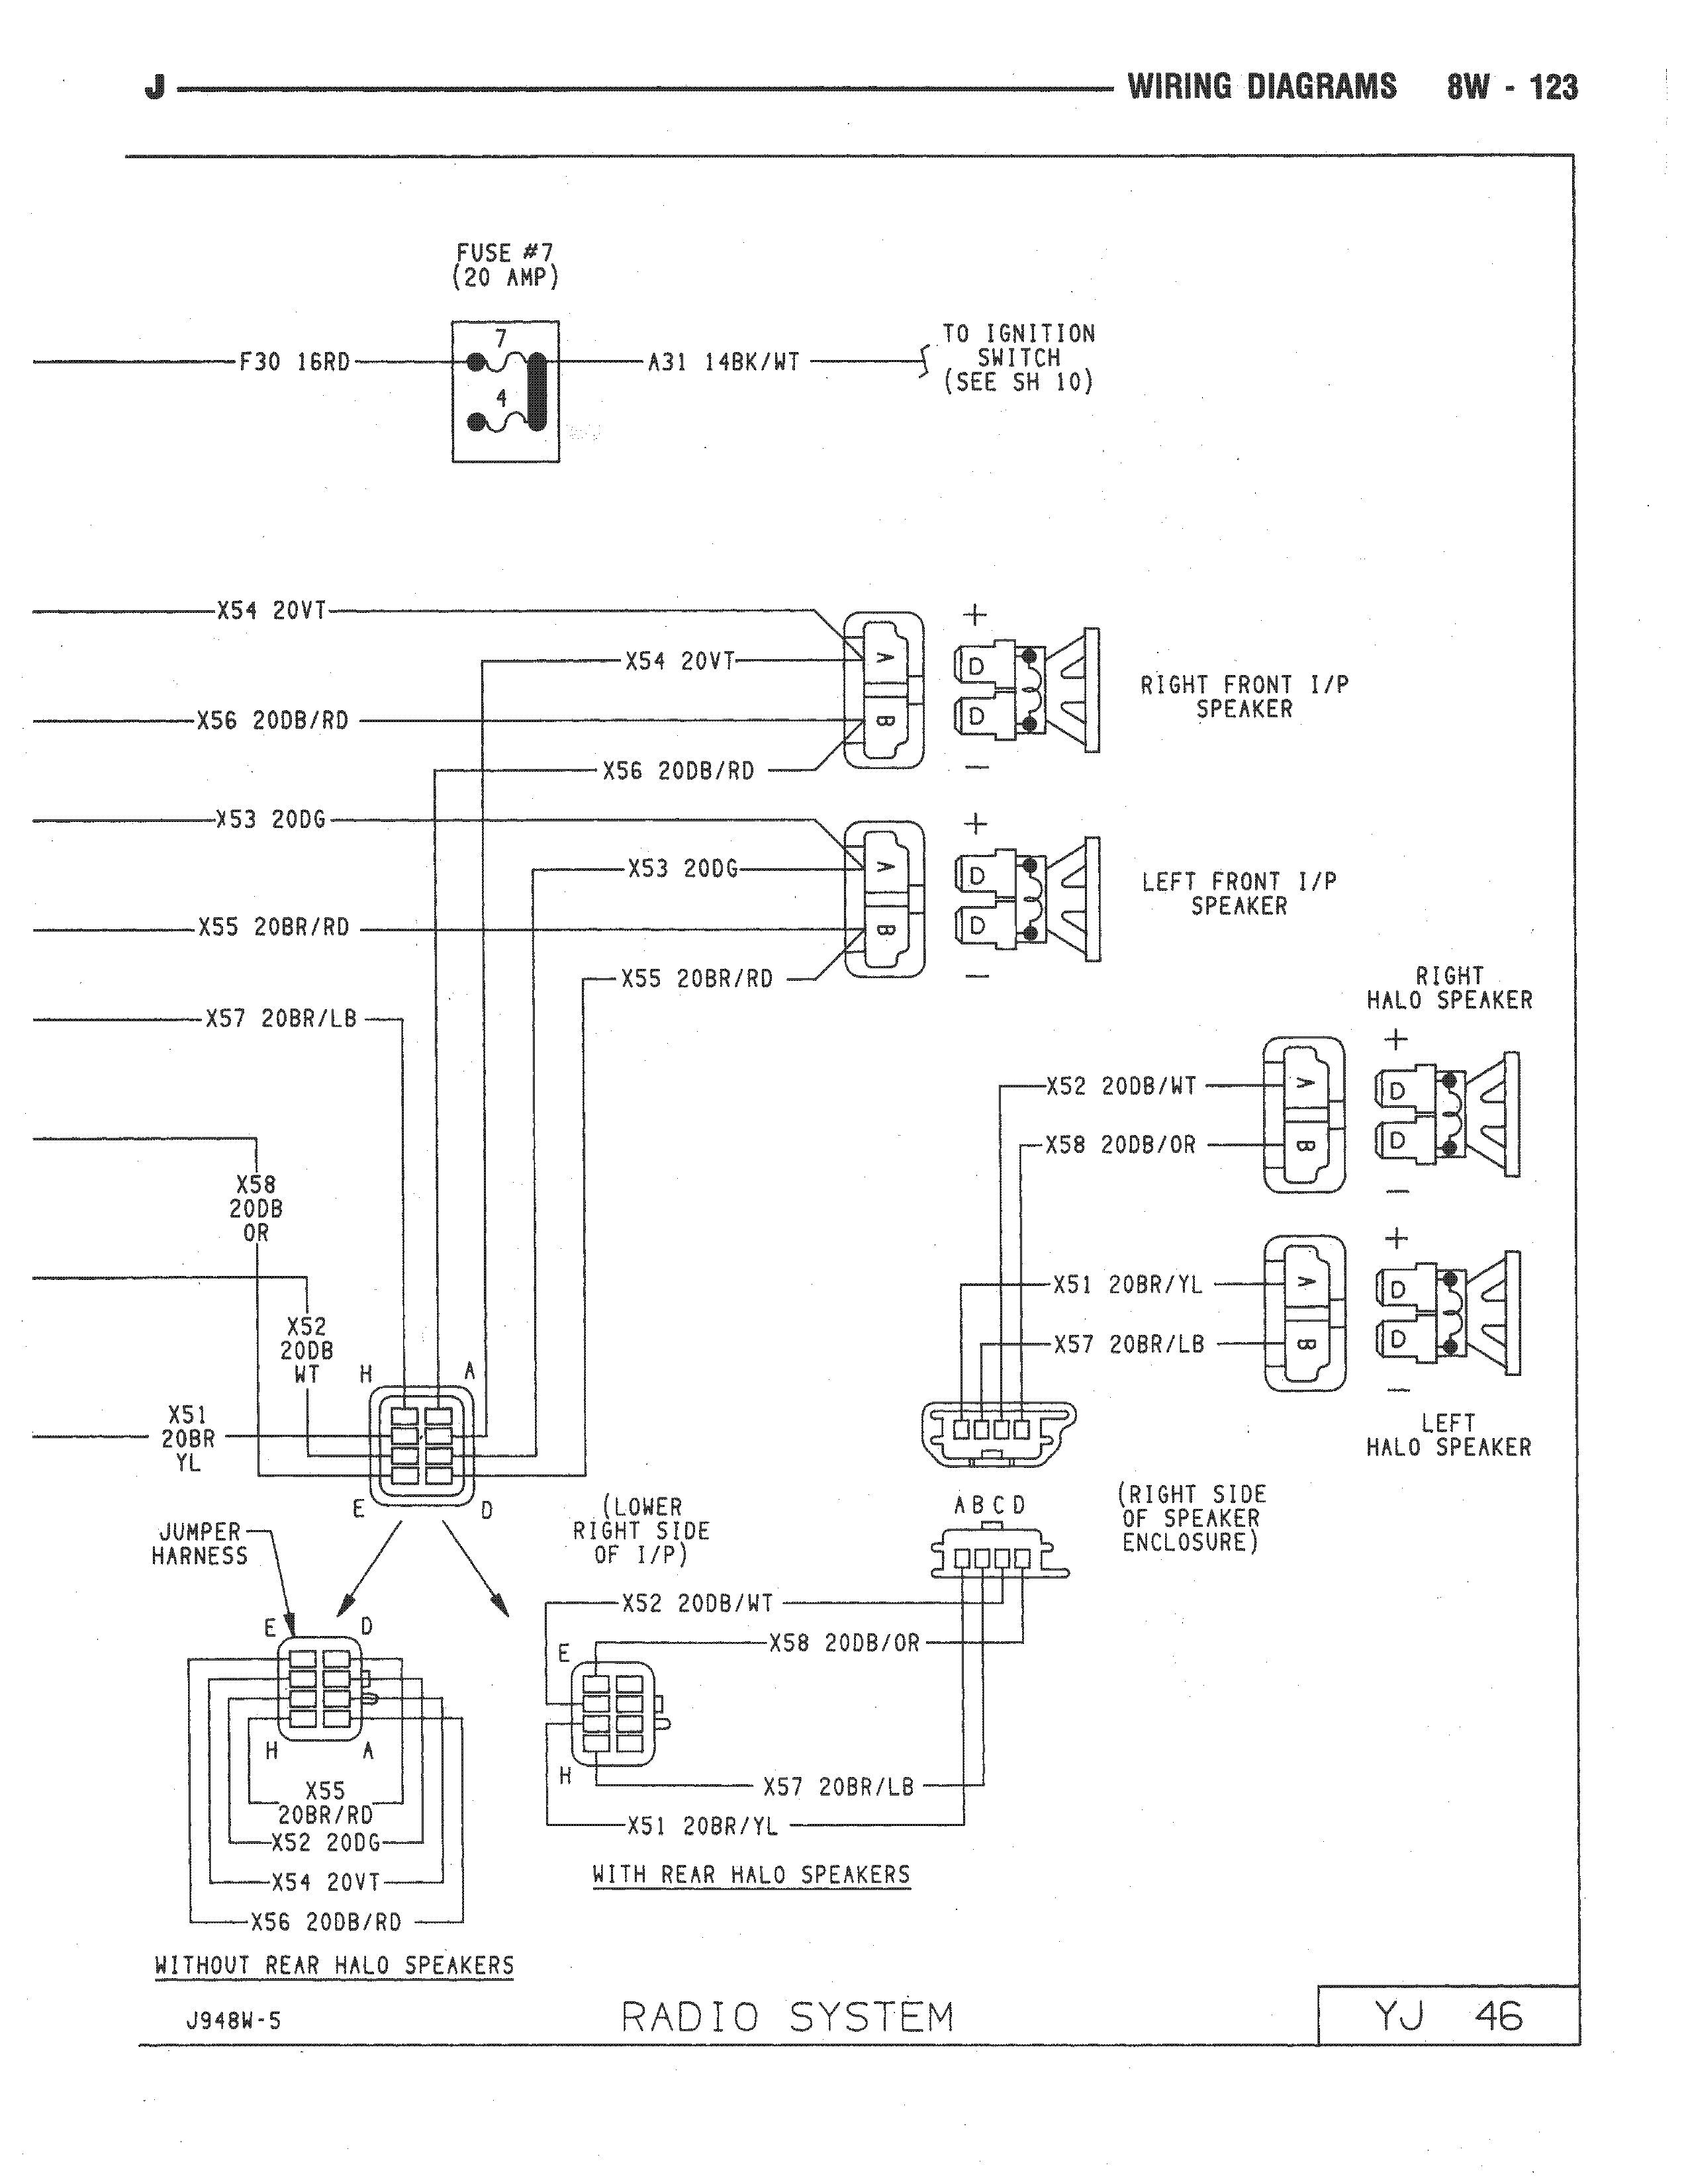 2014 jeep radio wiring diagram